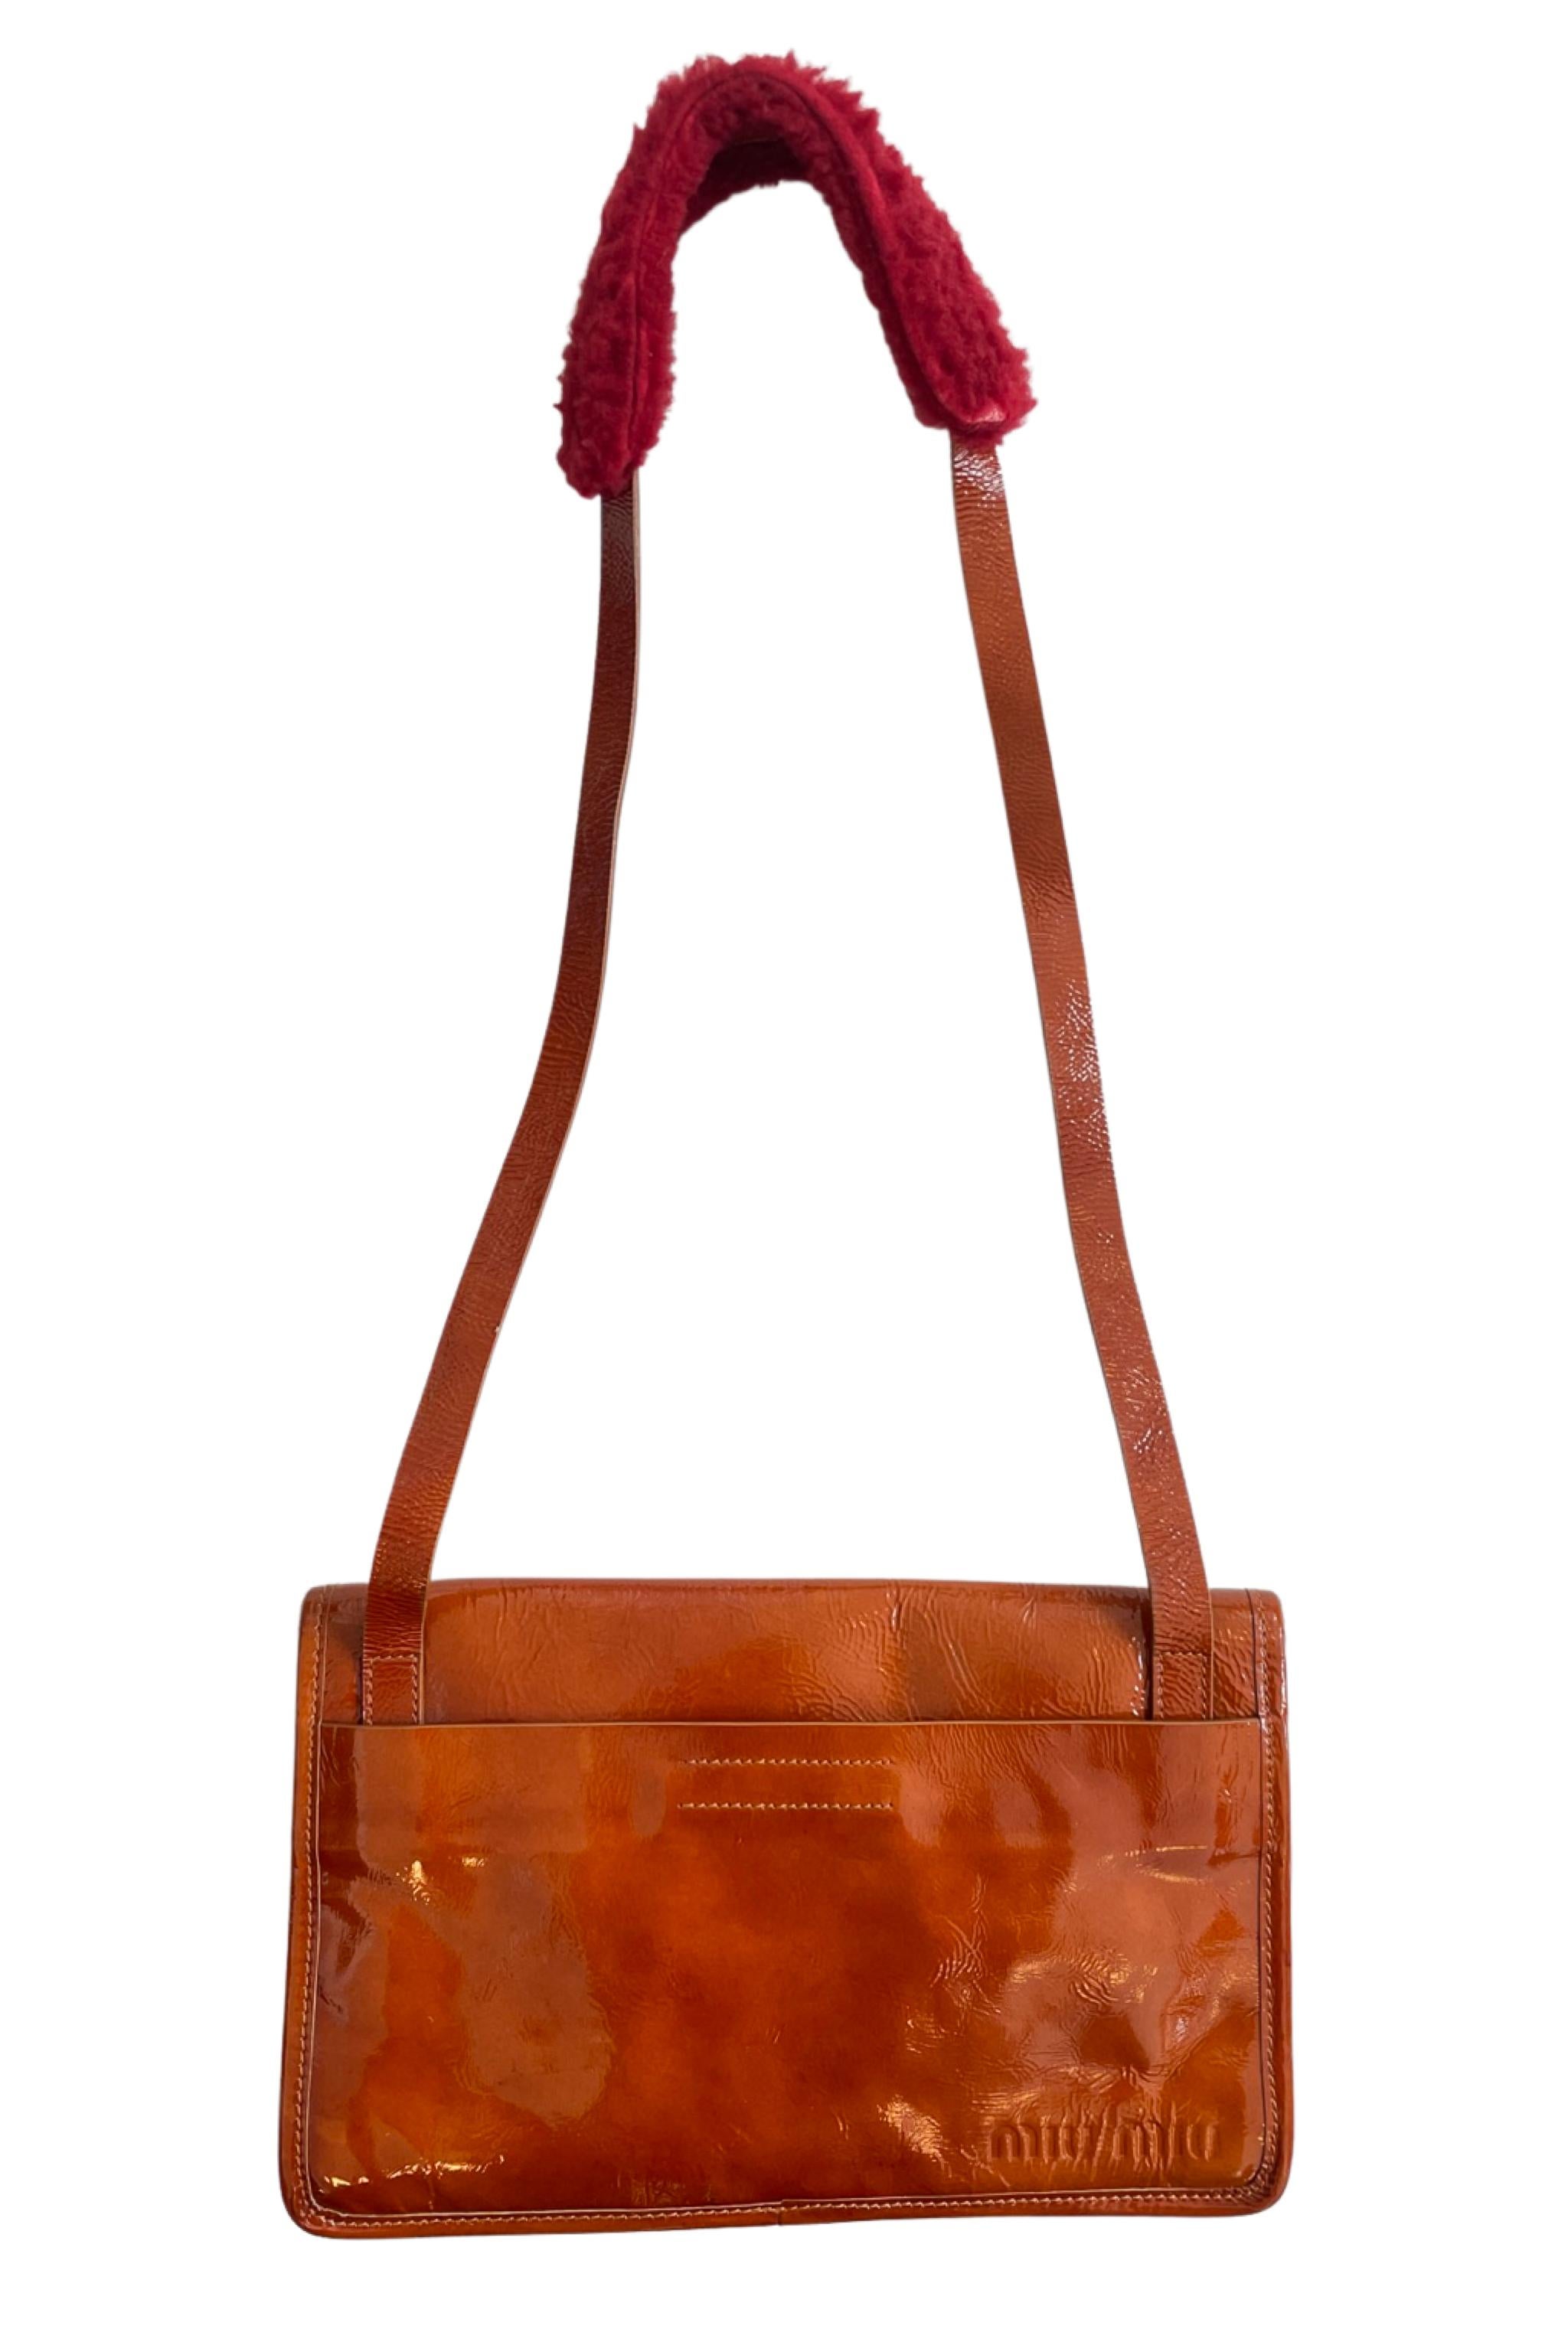 Miu Miu Orange Patent & Red Shearling Bag For Sale 2